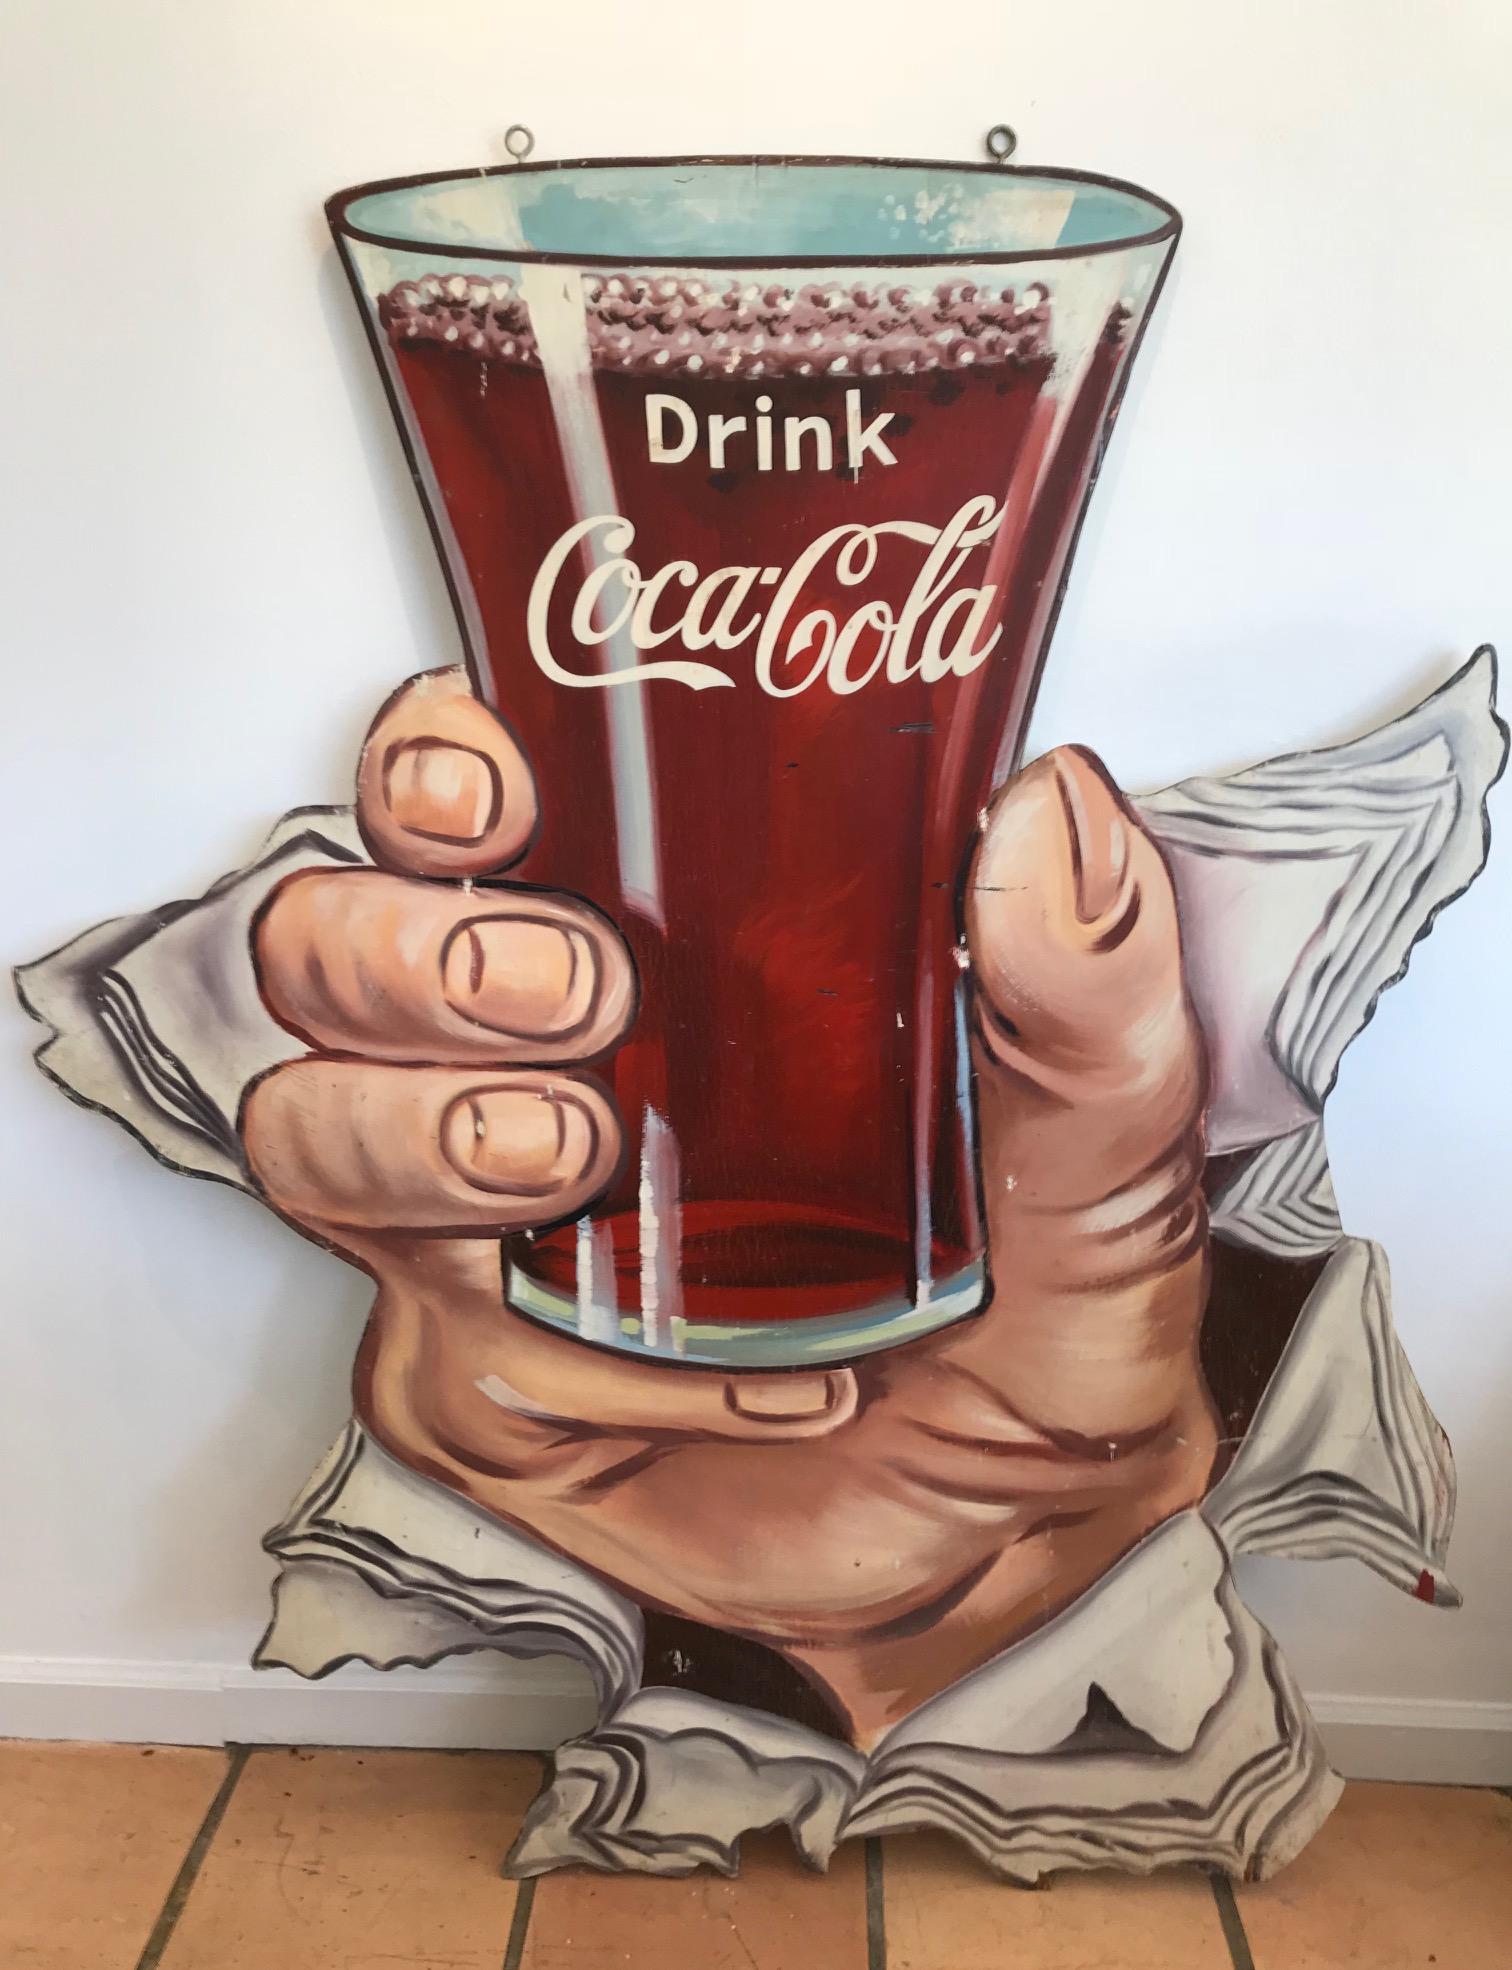 Coca-Cola sign - Unique Hand-Painted Wood Coke Sign - "Drink Coca-Cola" c 1950s 